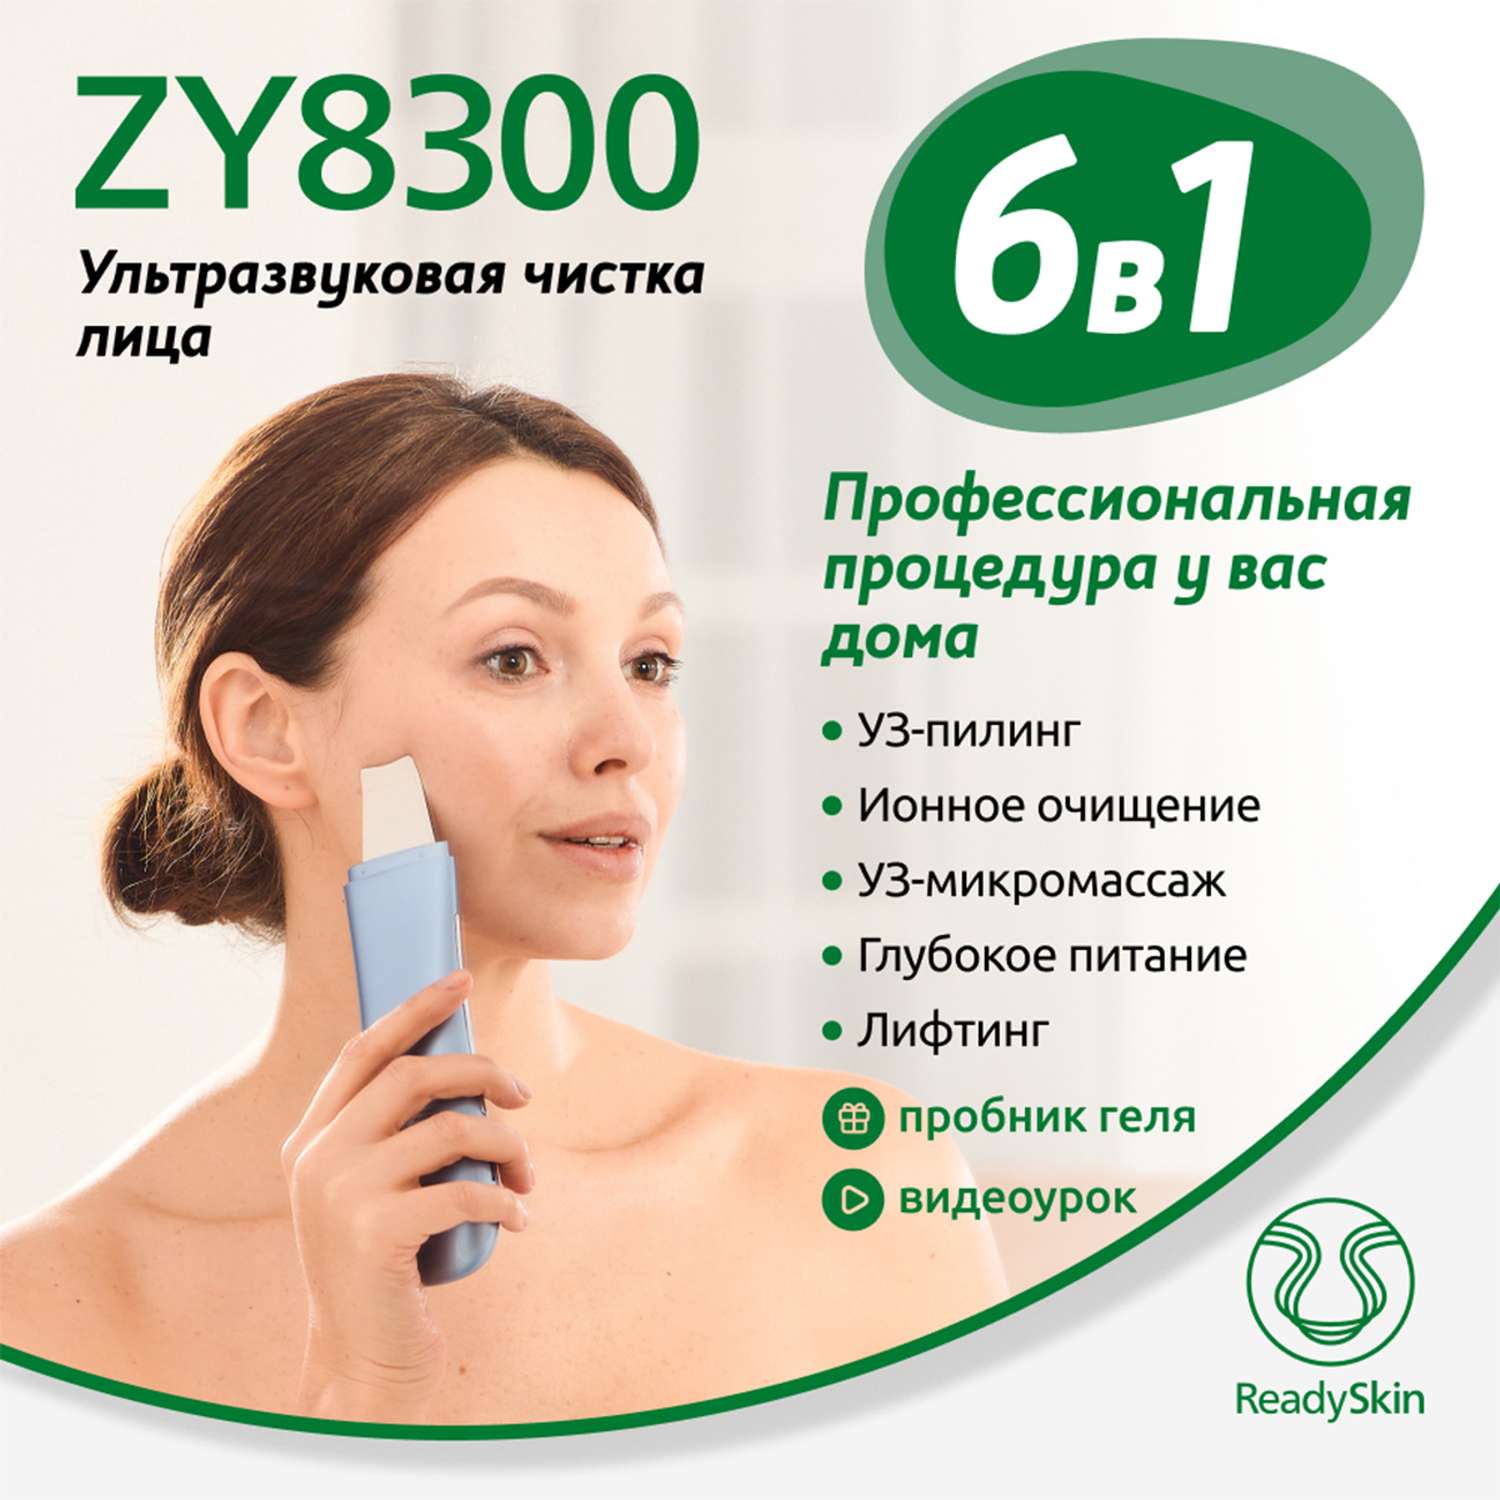 Прибор ReadySkin ZY8300 для ультразвуковой чистки лица - фото 2